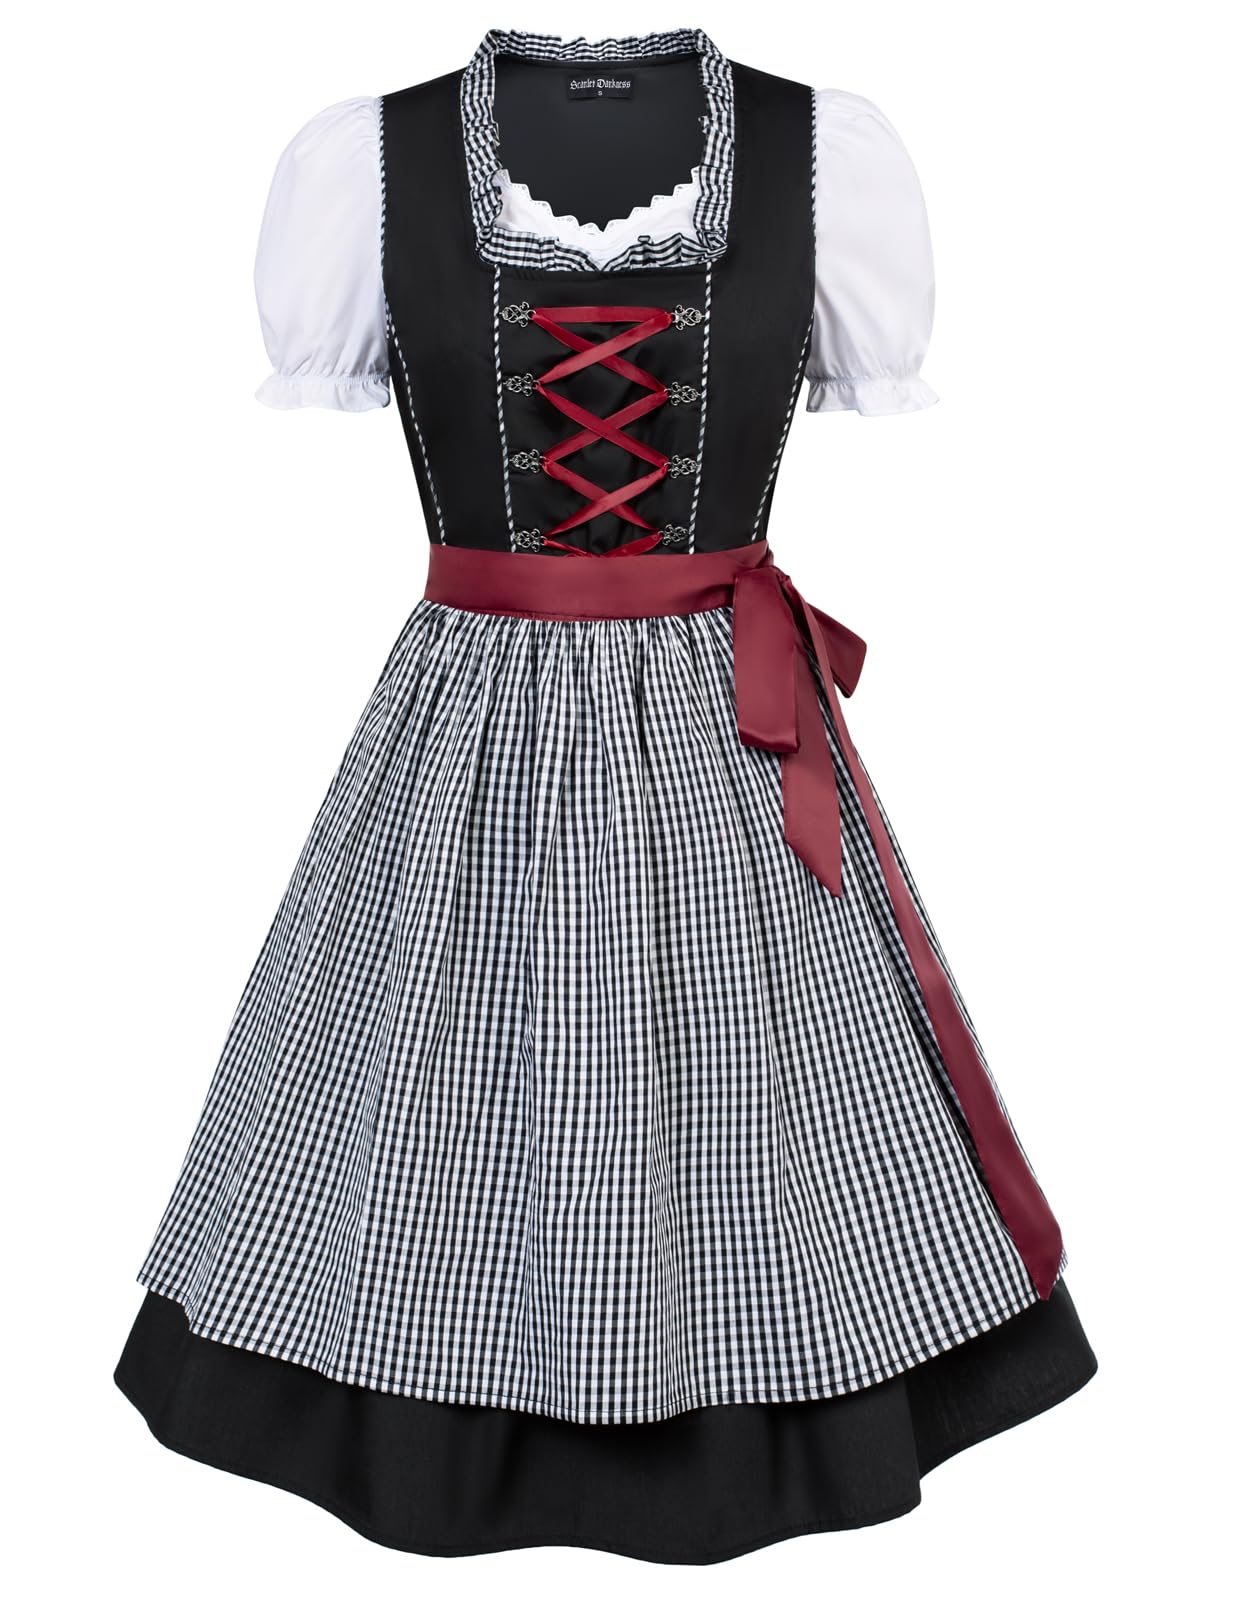 Scarlet Darkness Women's German Dirndl 3 Piece Dress Costumes for Oktoberfest... - Picture 1 of 1